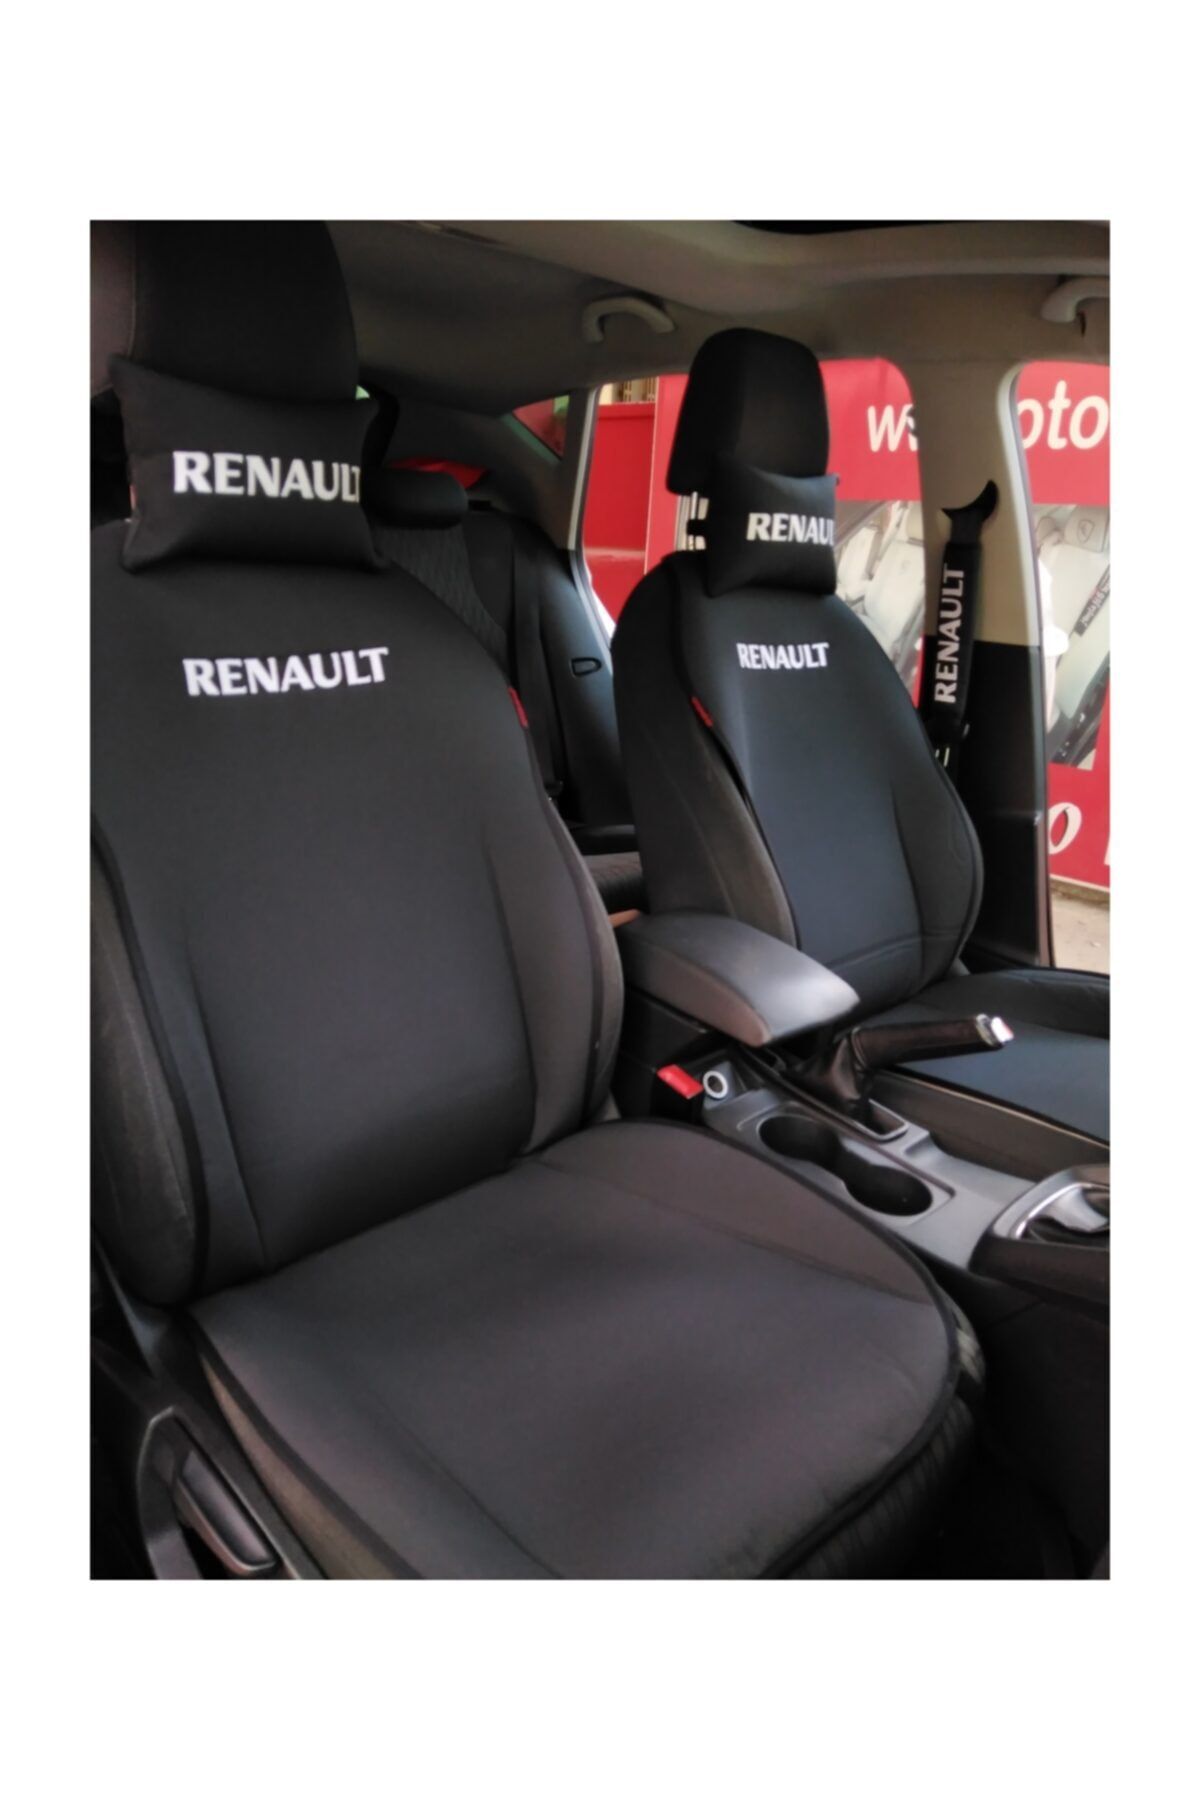 otomind Renault Nakışlı Ön Ikili Oto Koltuk Kılıfı